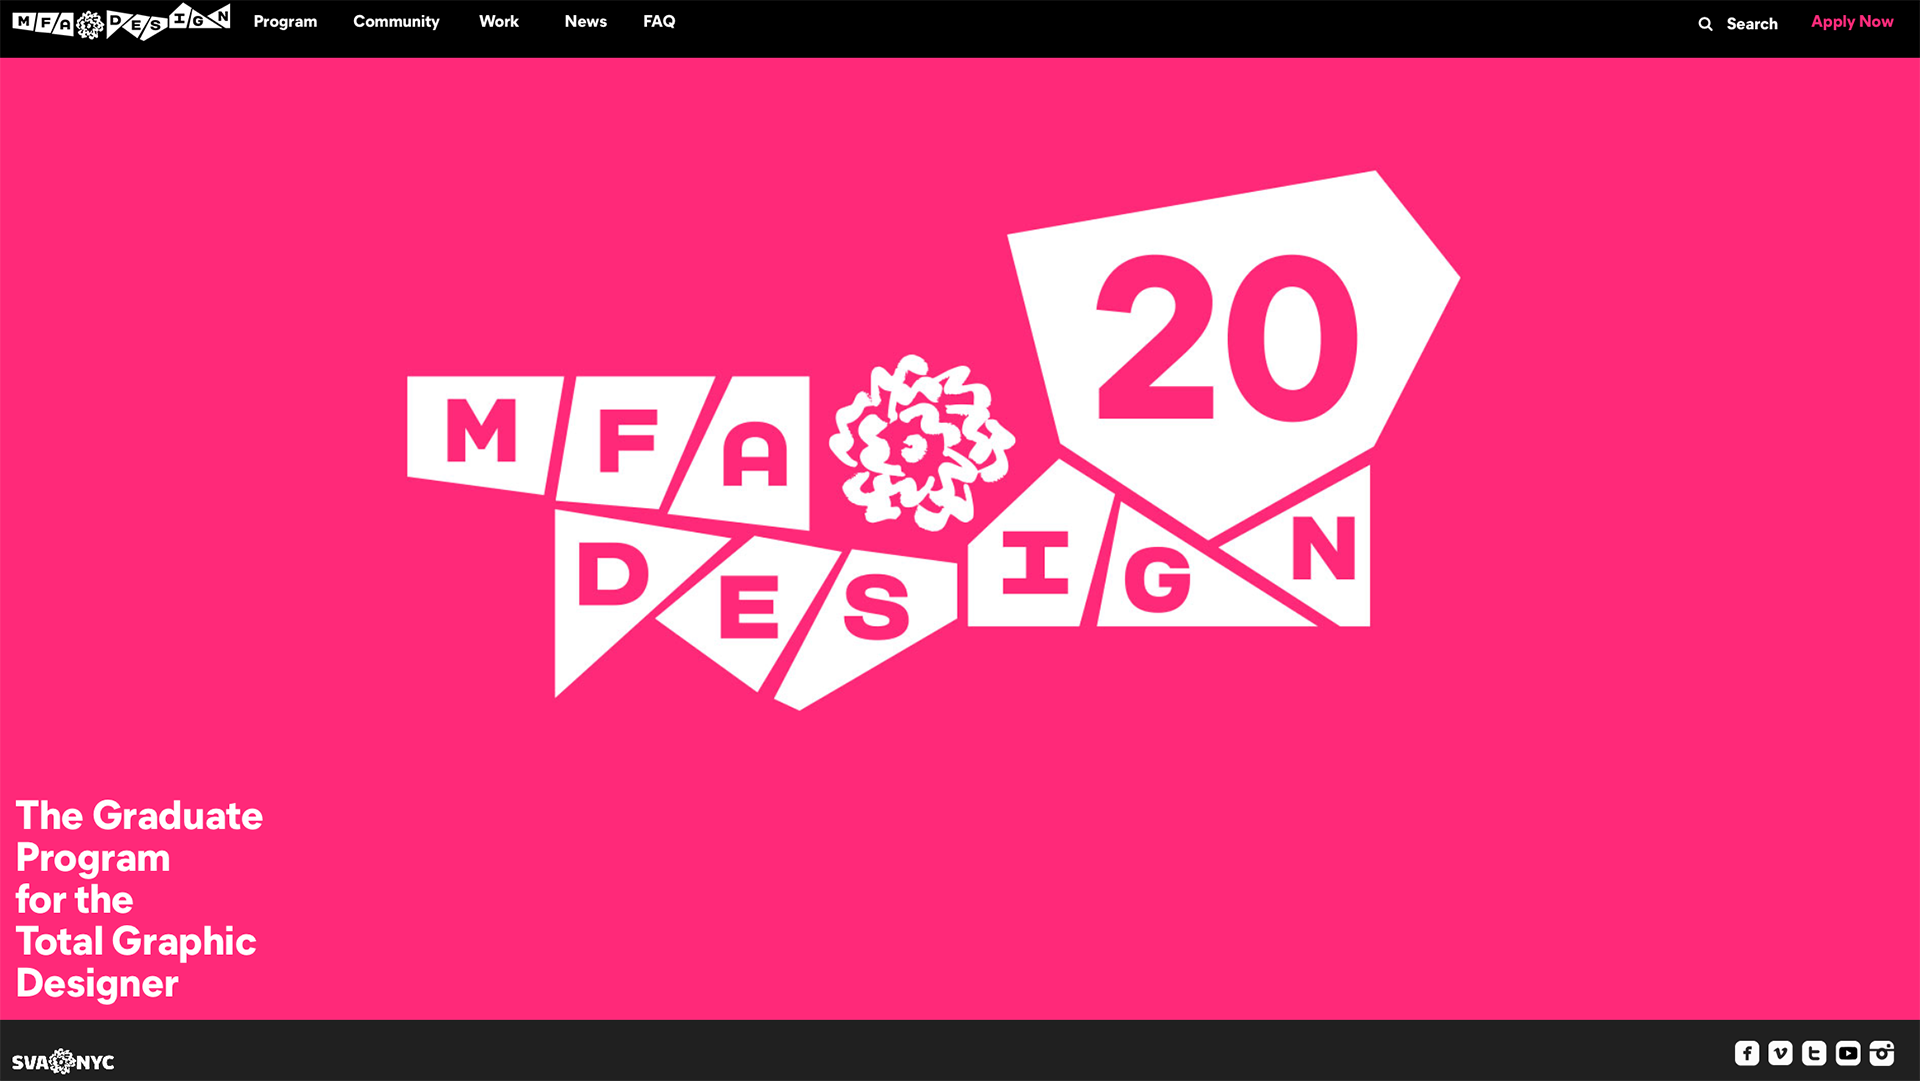 MFA Design website